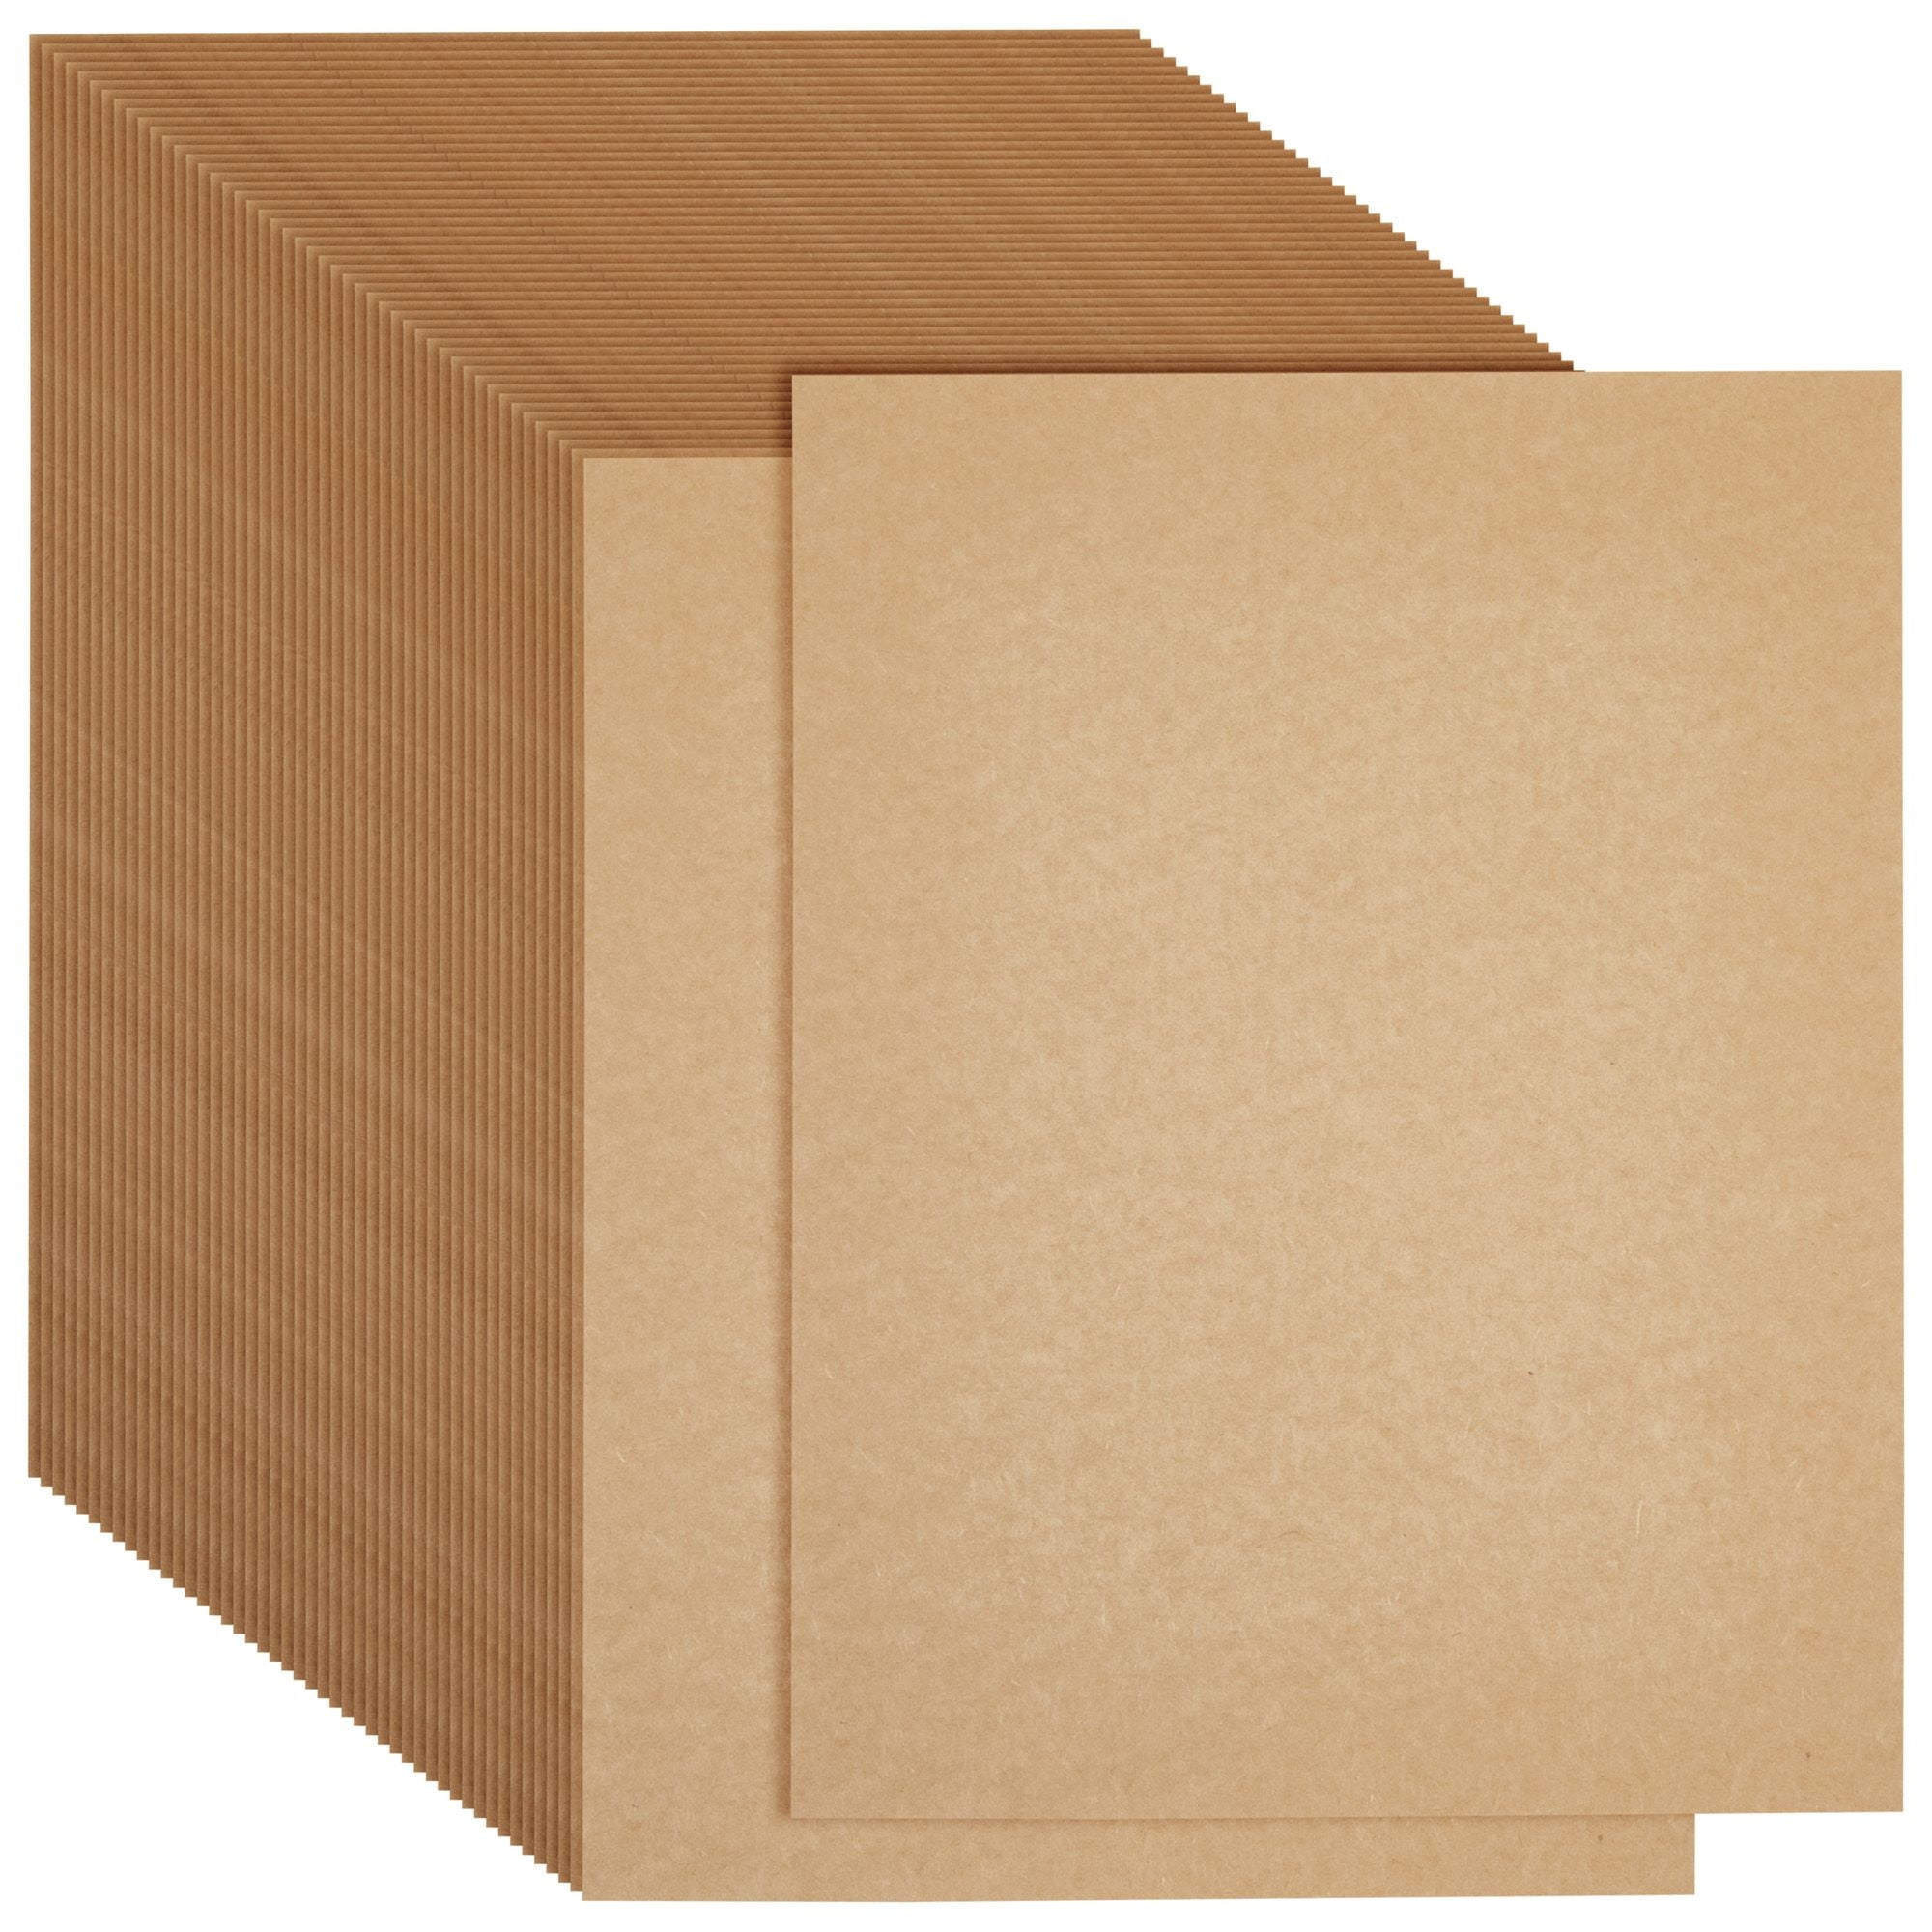 Buy 11 x 16 - 50 lb. Kraft Paper Sheets - 2450pk (53BXPKPS111650)